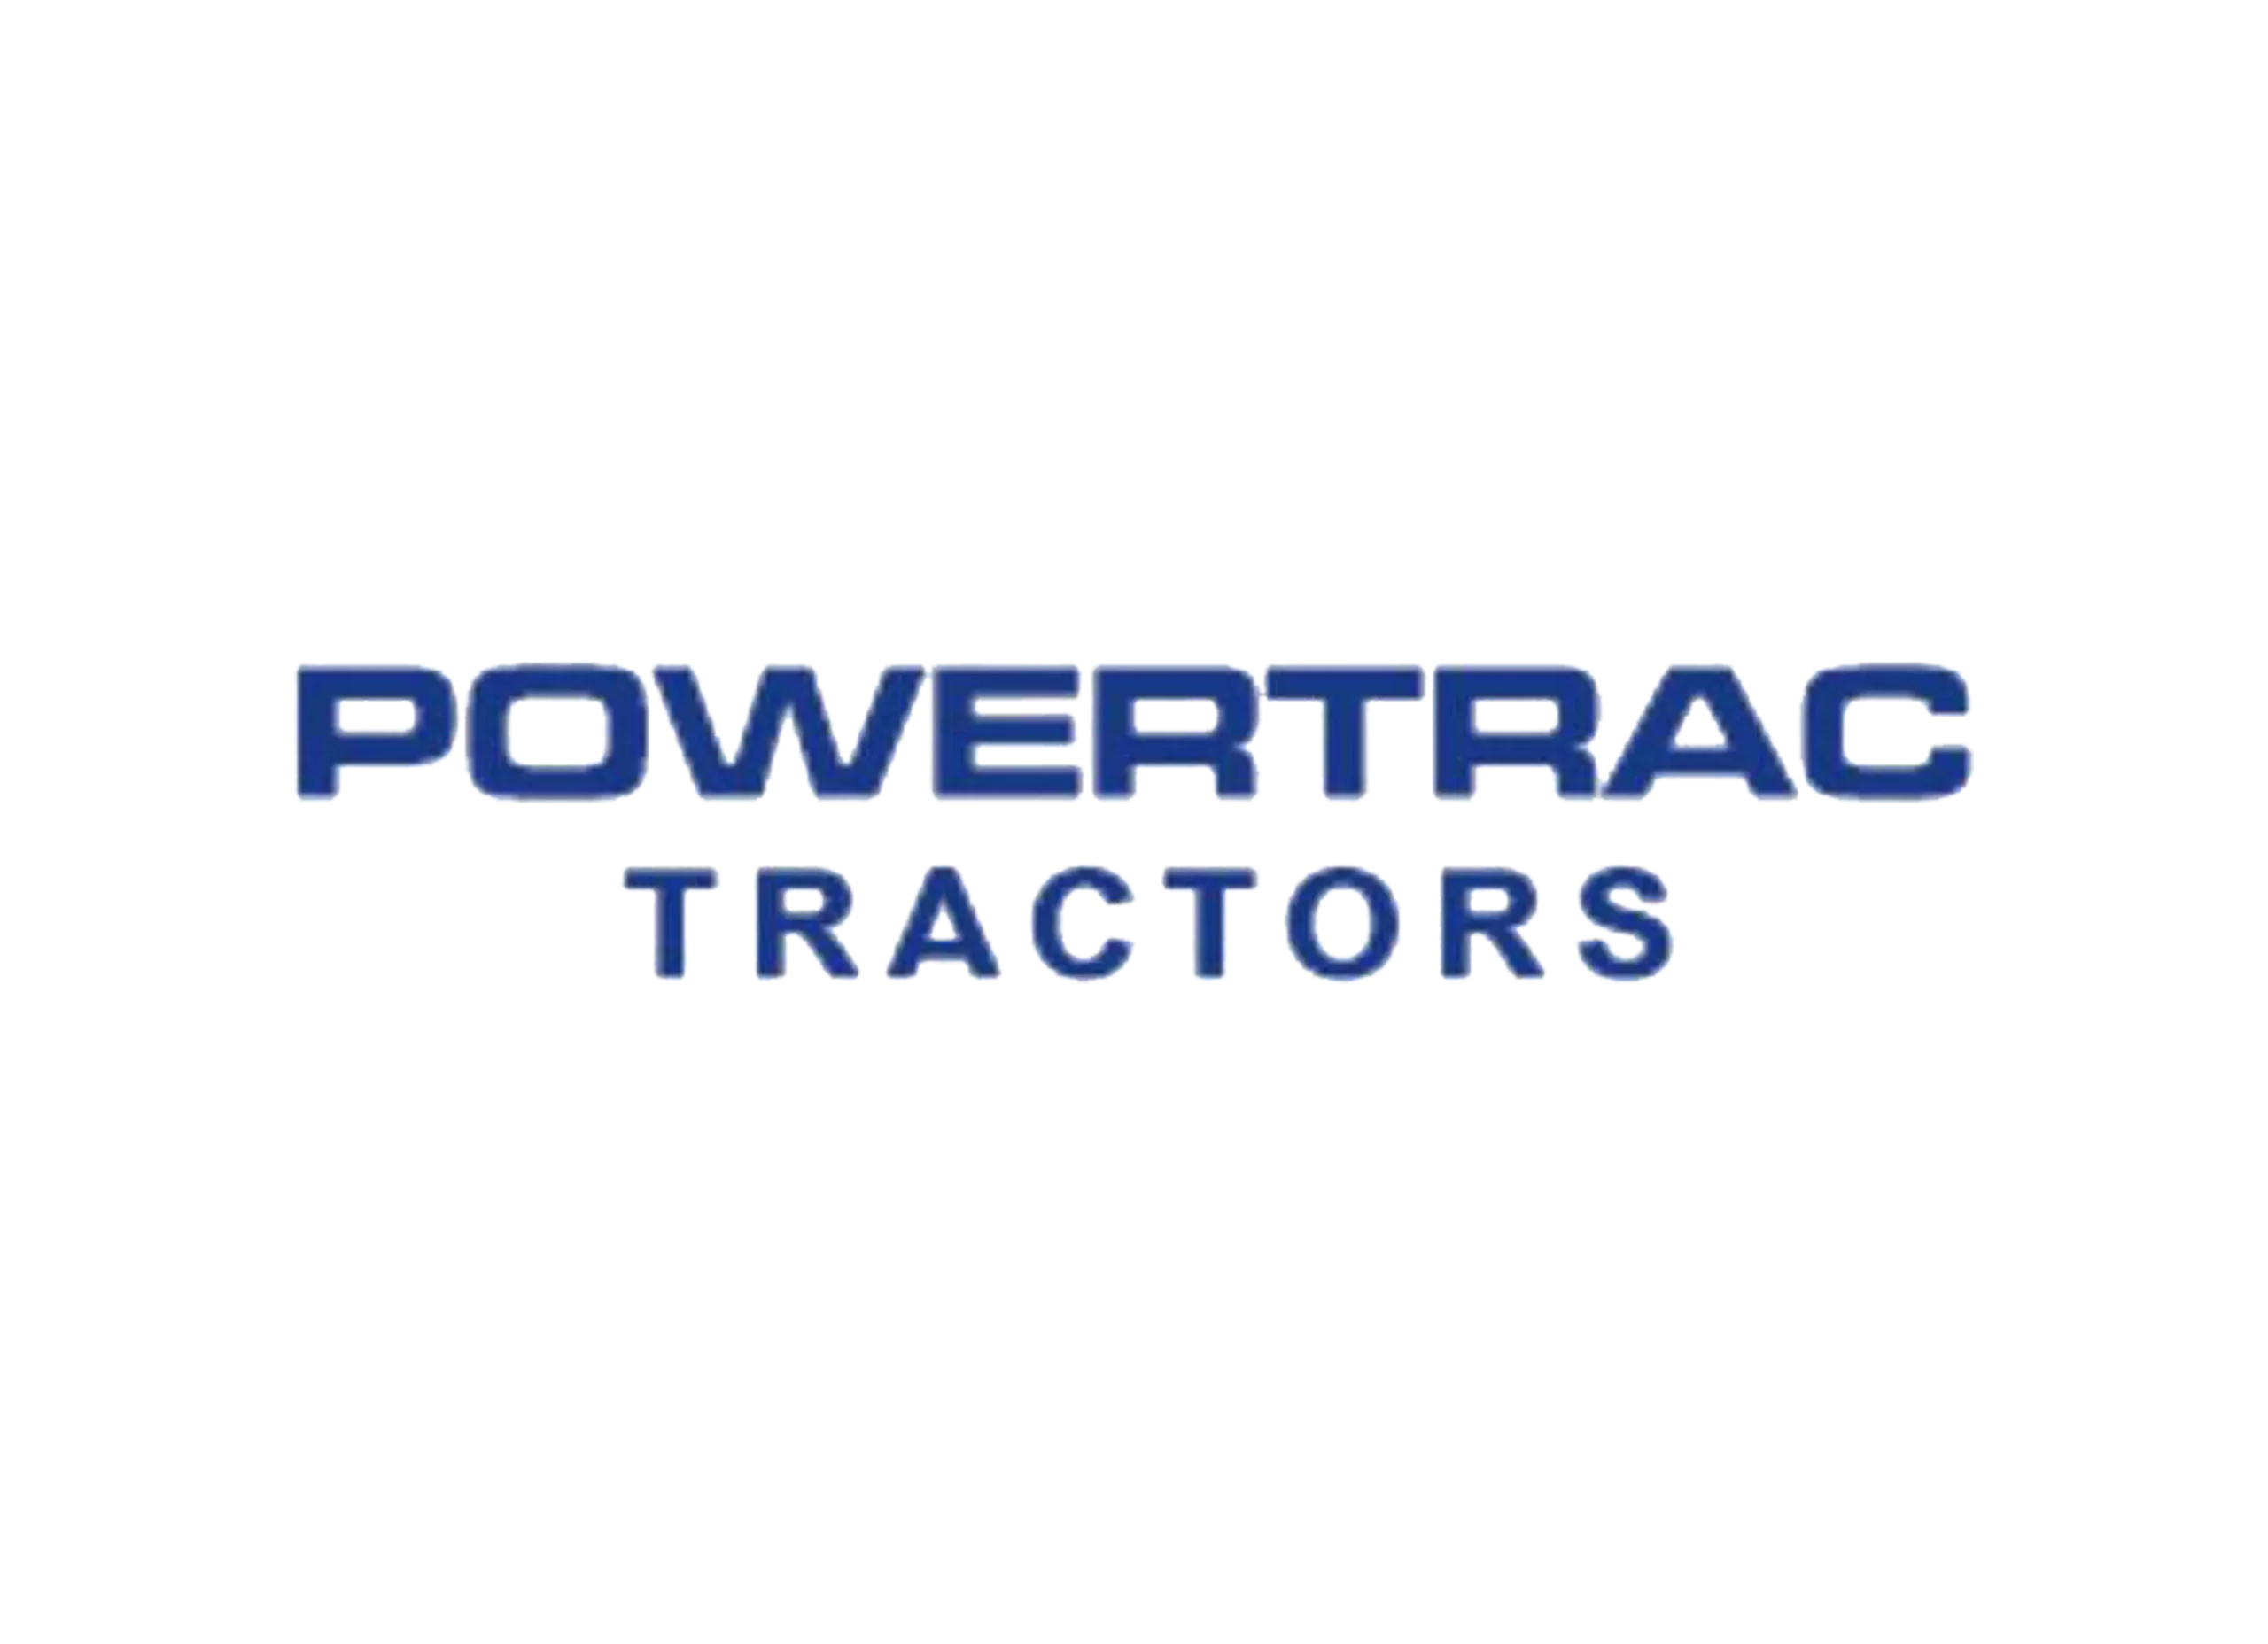 Powertrac logo present